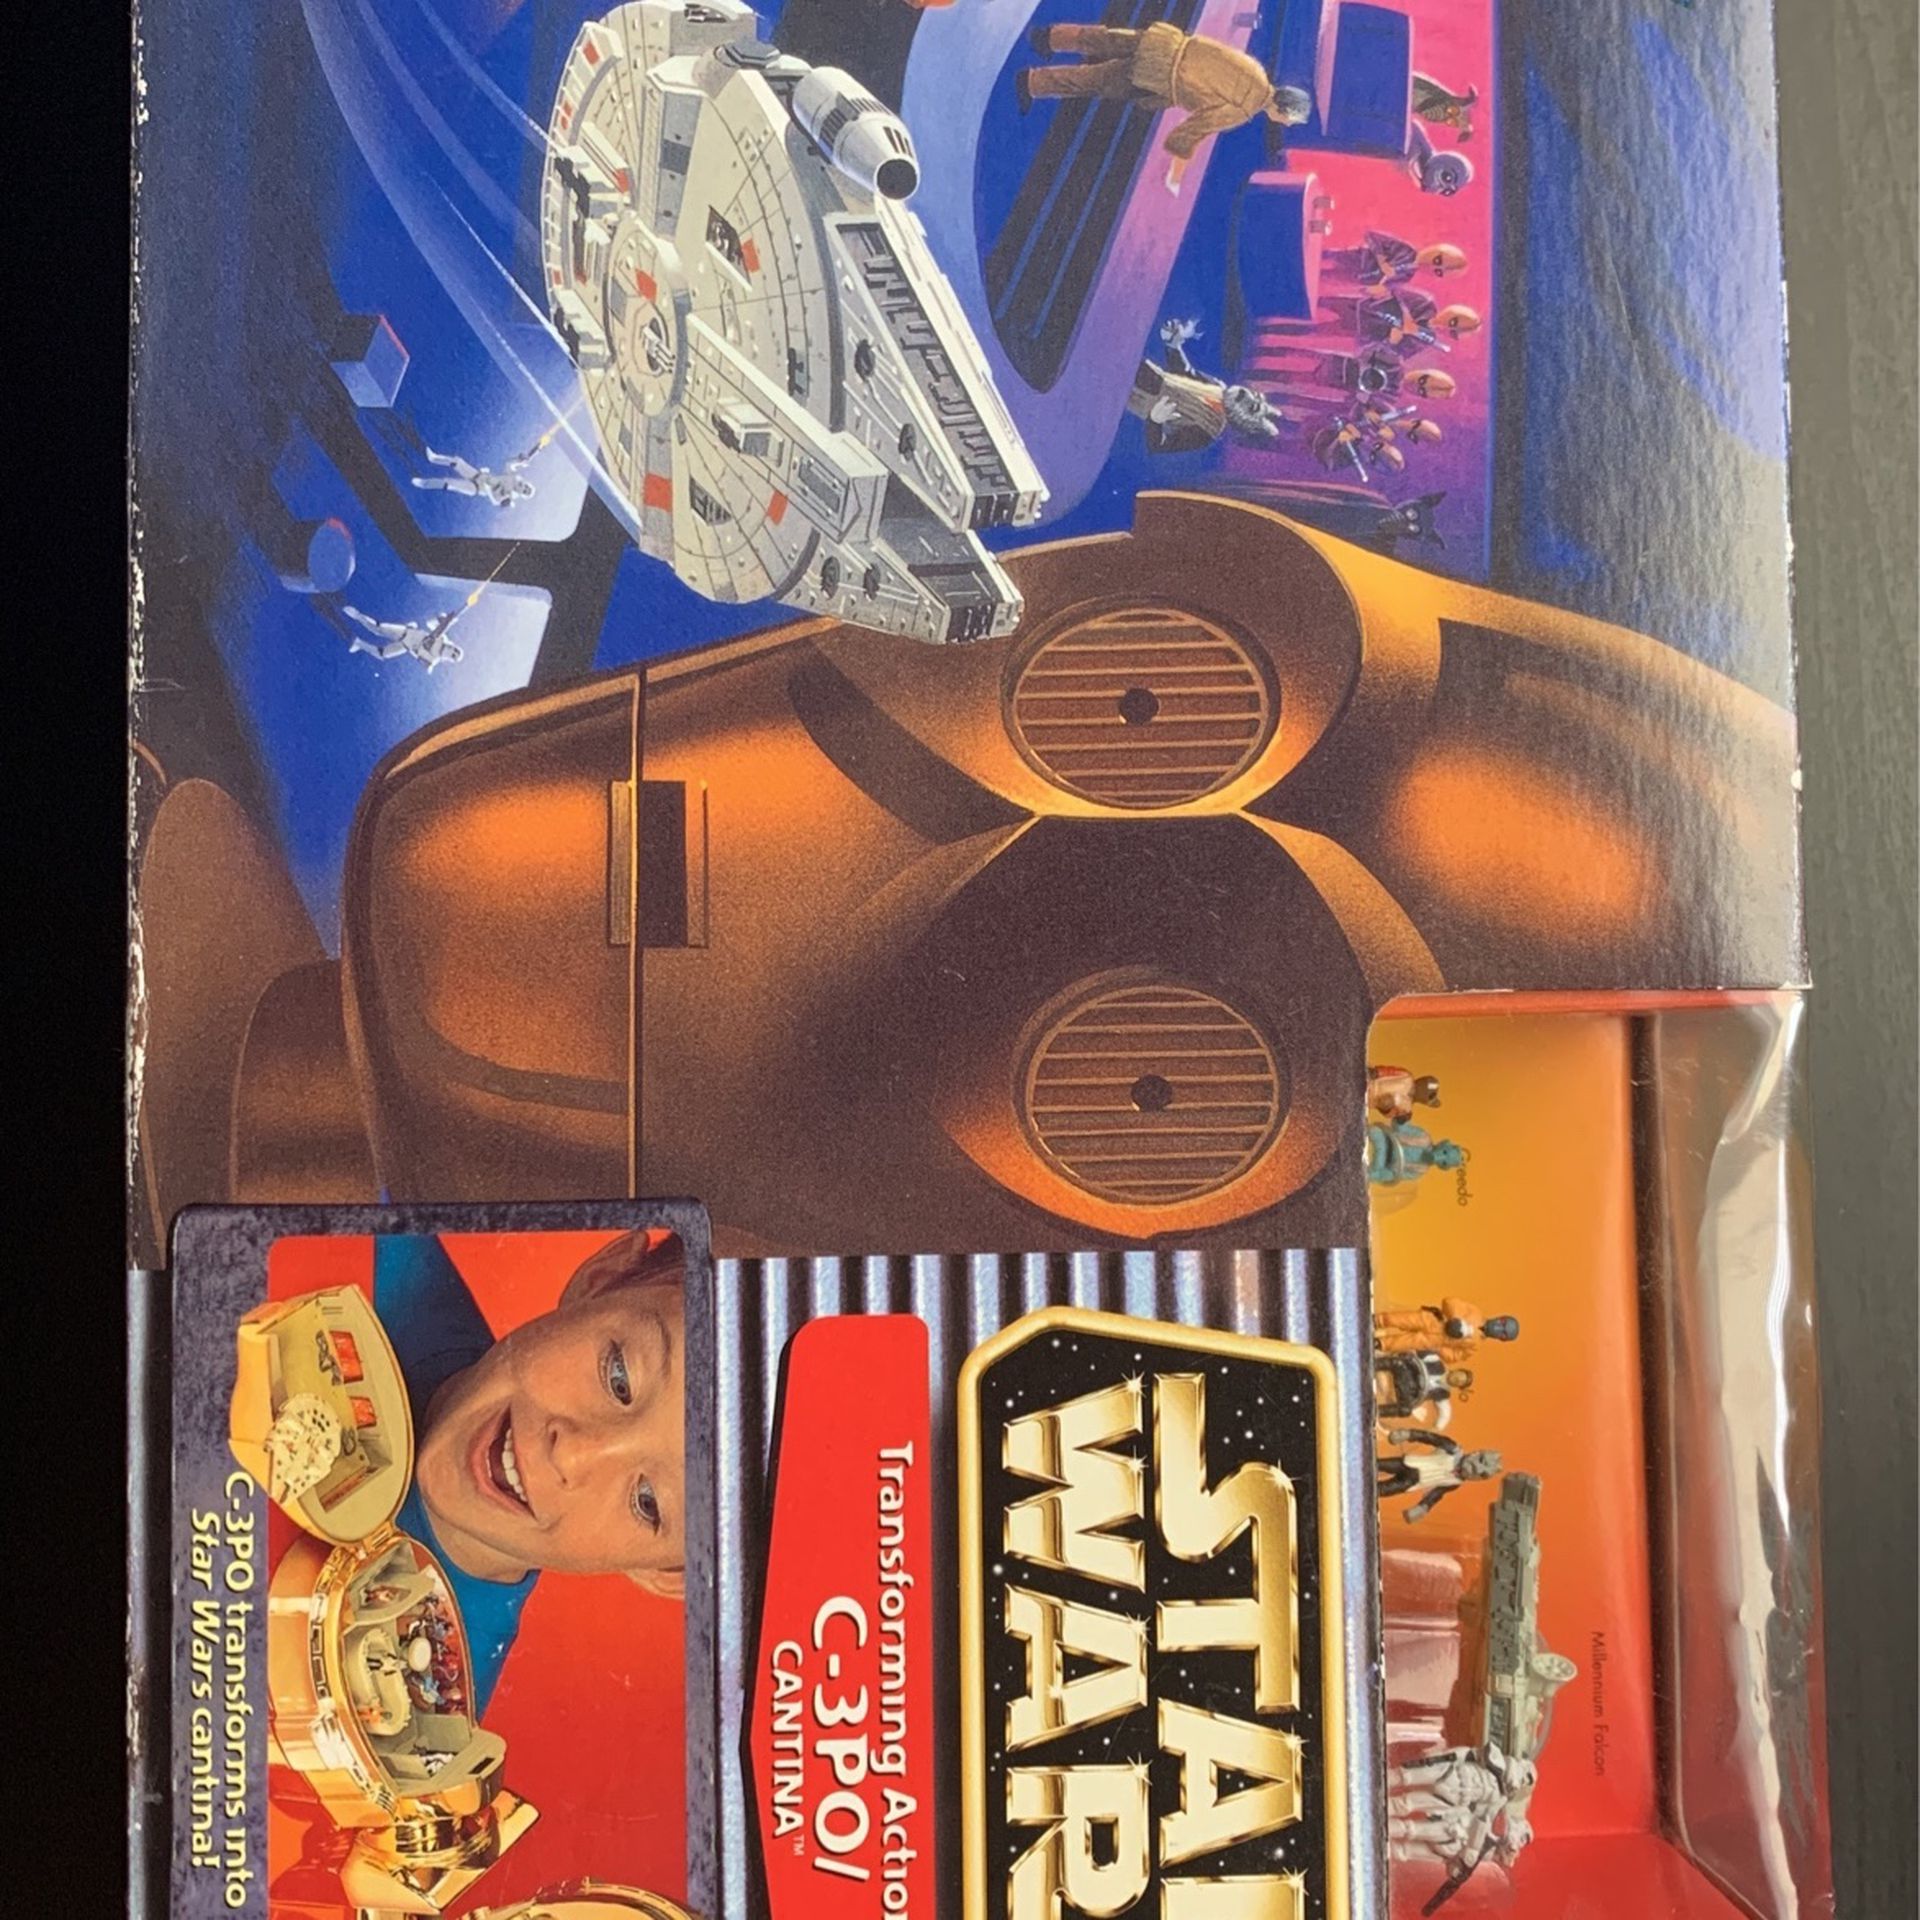 Star Wars C-3PO/Cantina-Micro machines transforming play set